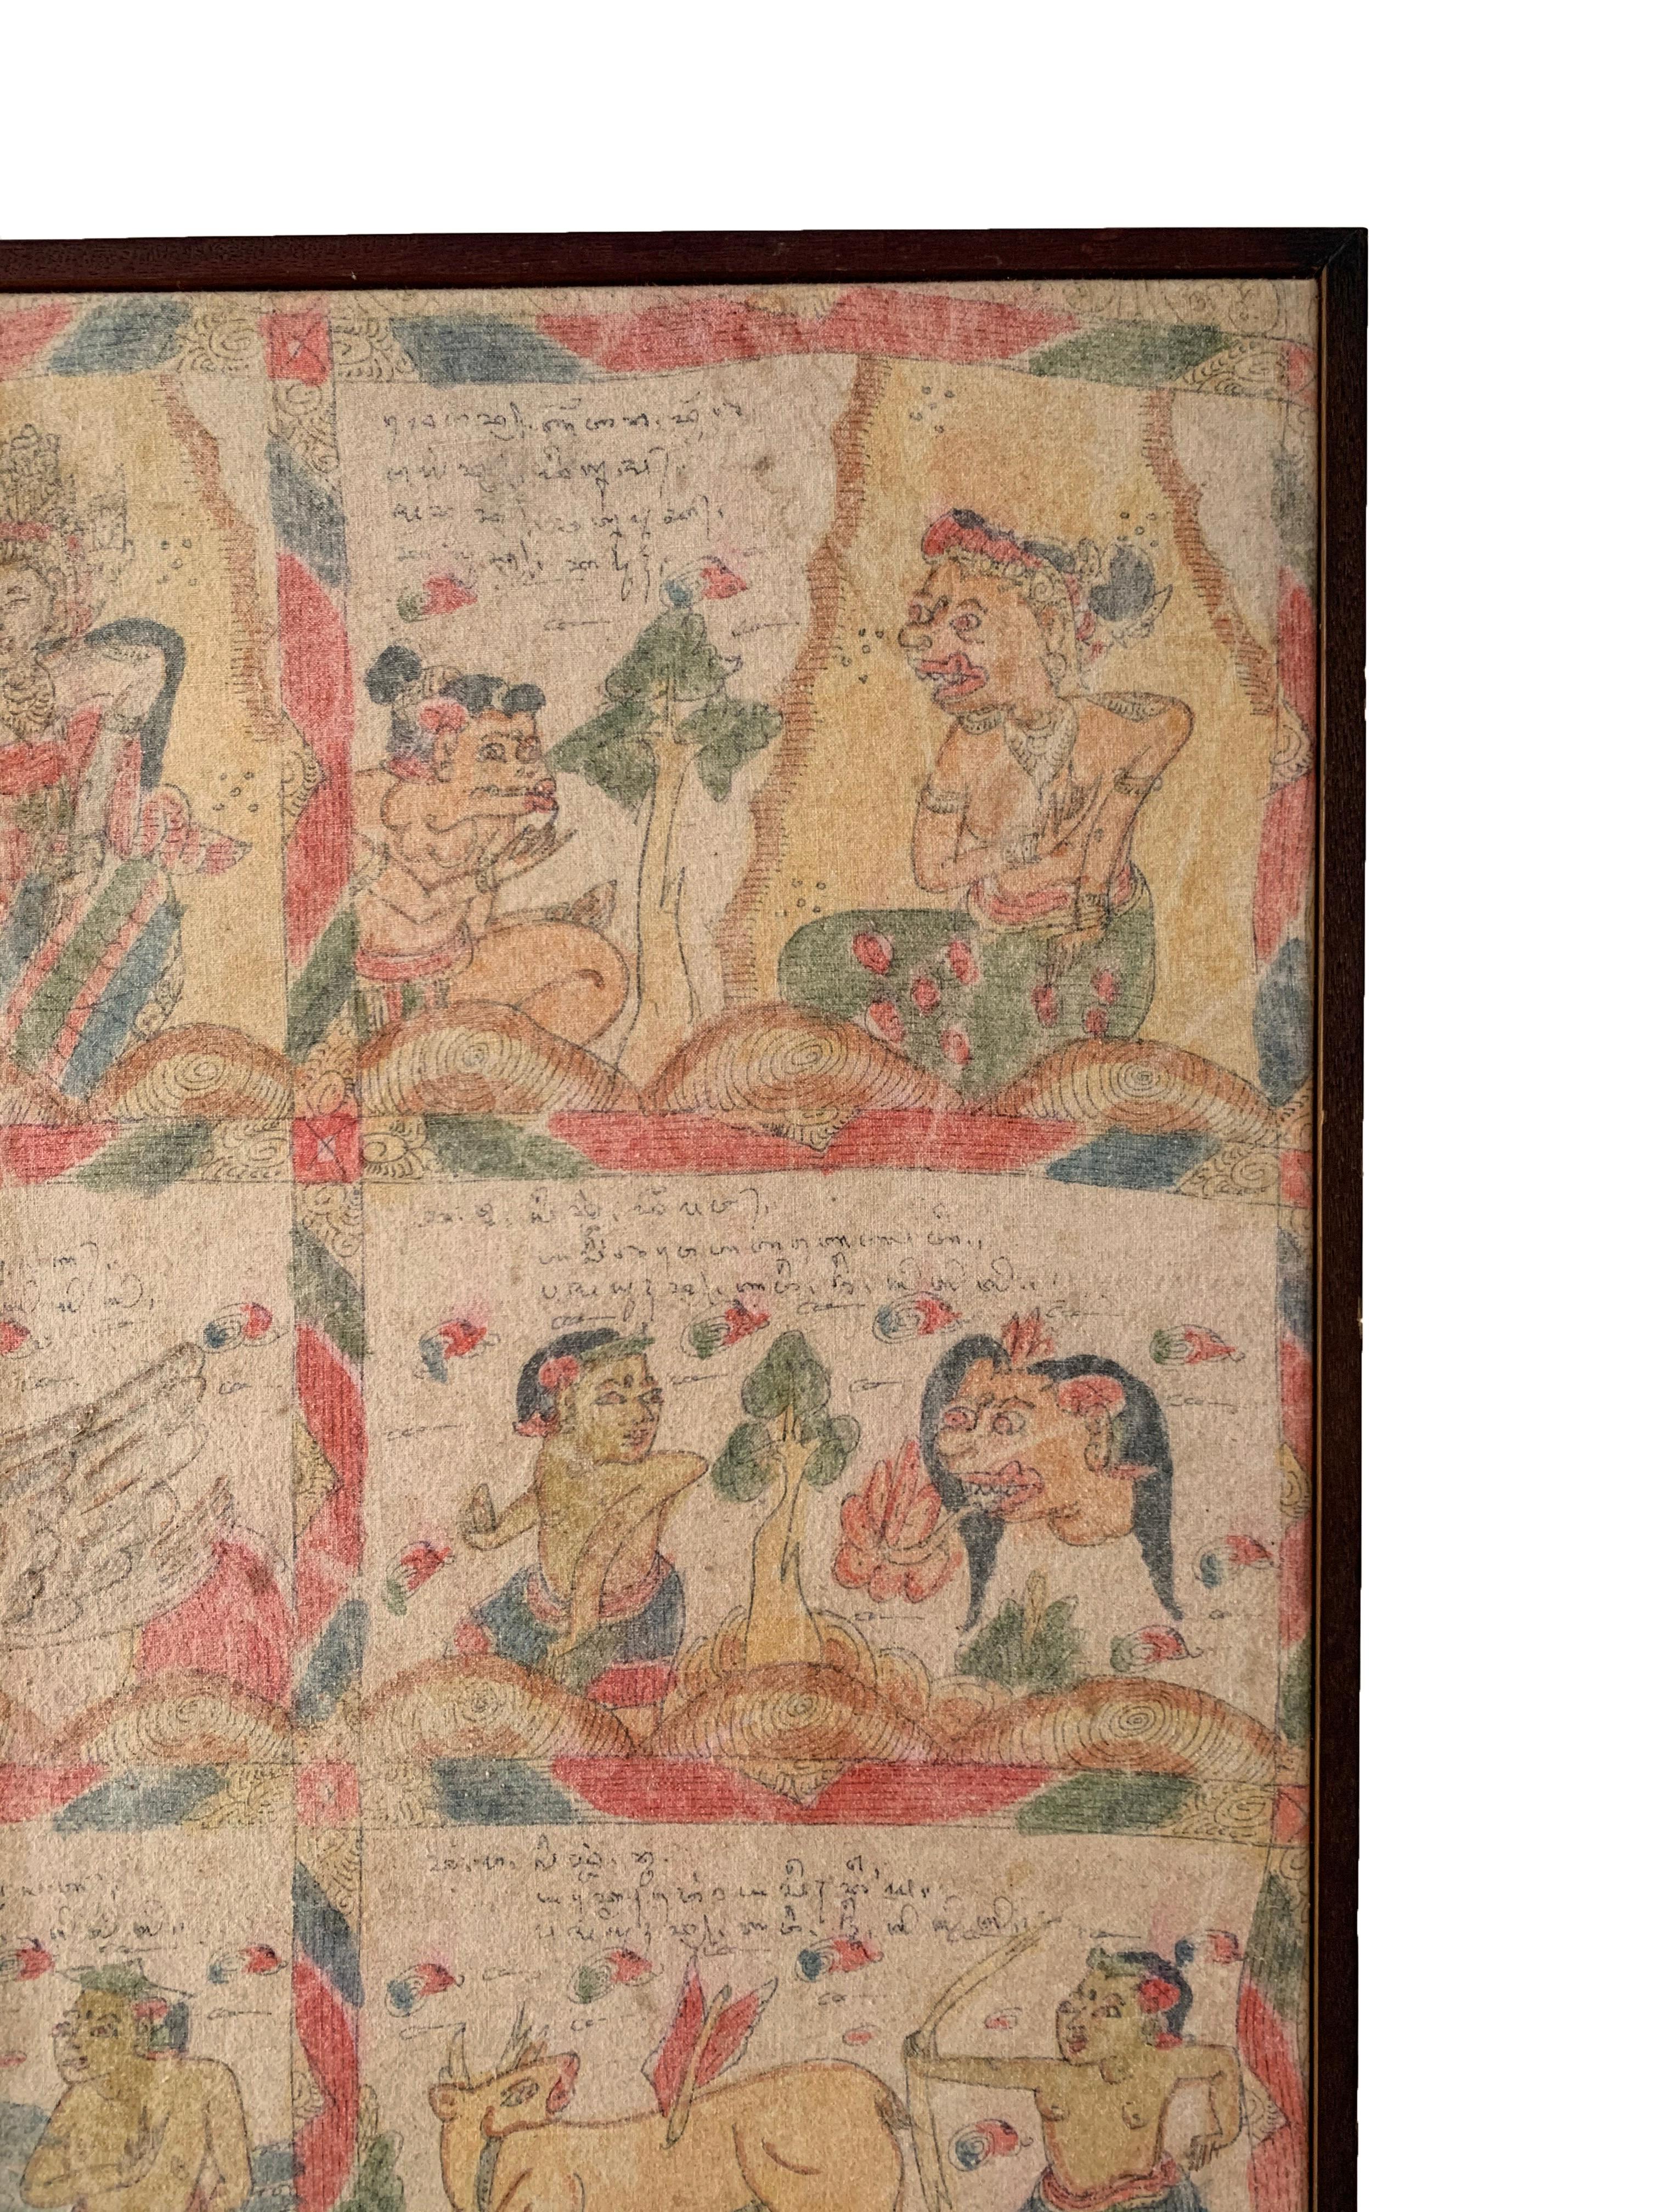 Bali Hindu Textile Framed 'Kamasan' Painting, Indonesia, Early 20th Century 1